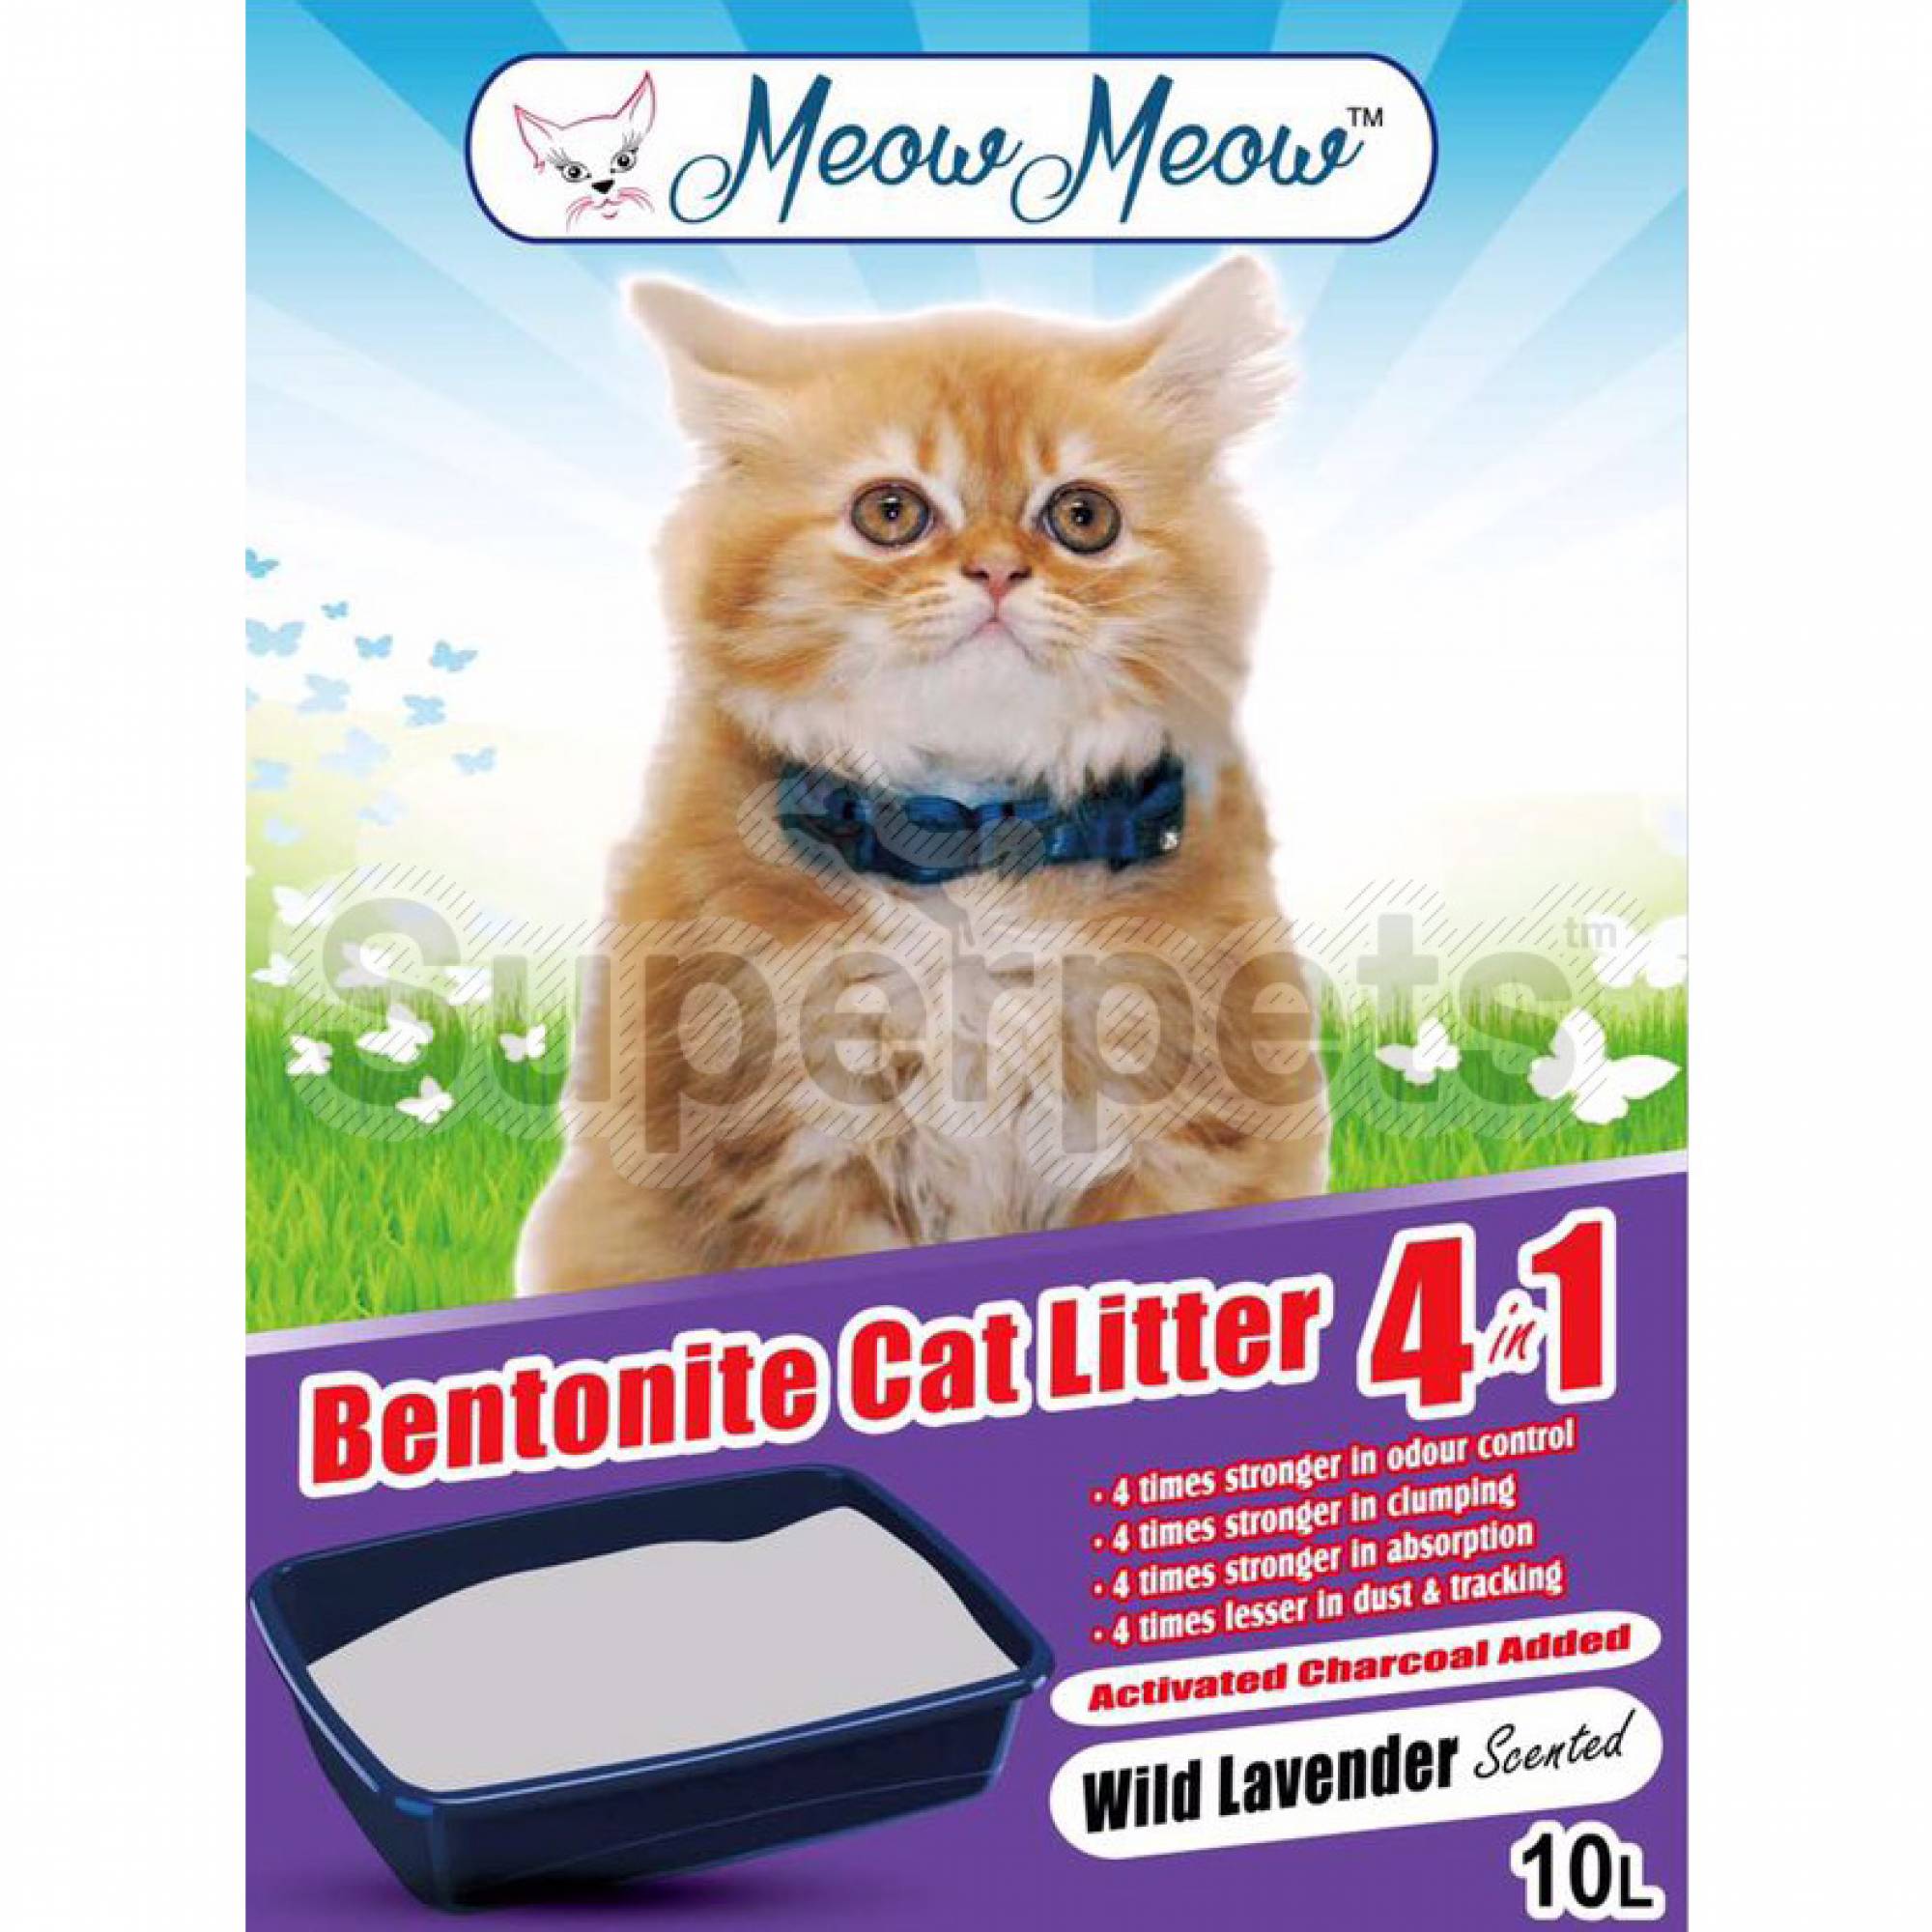 Meow Meow - Bentonite Cat litter 4-in-1 - Wild Lavender 10L